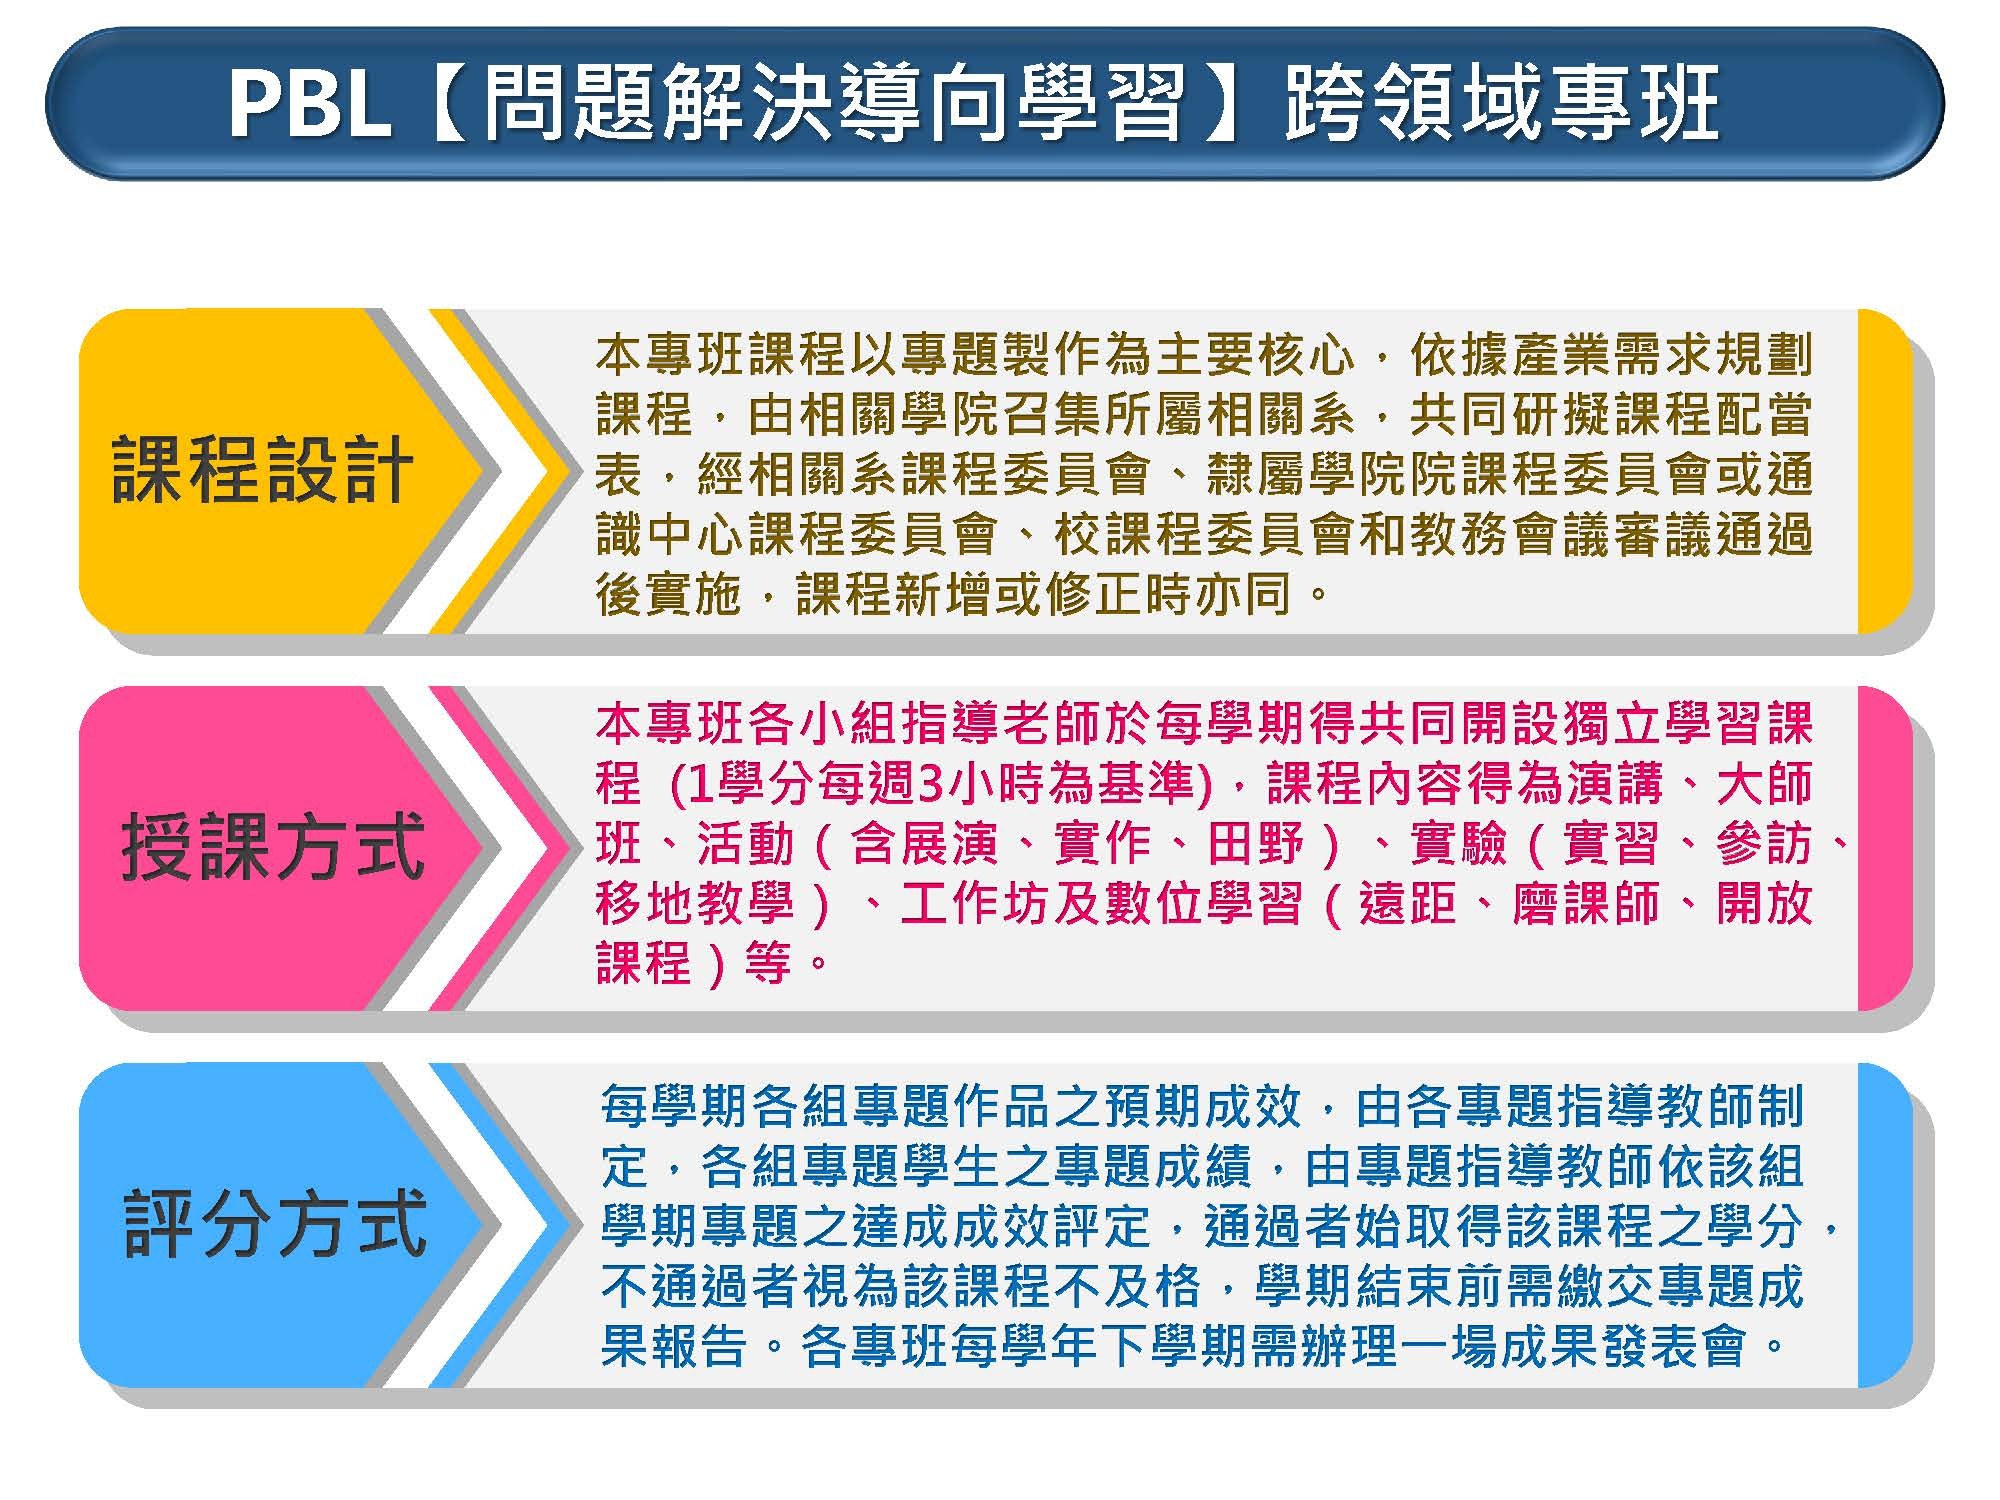 PBL(物聯網)跨領域專班授課方式示意圖